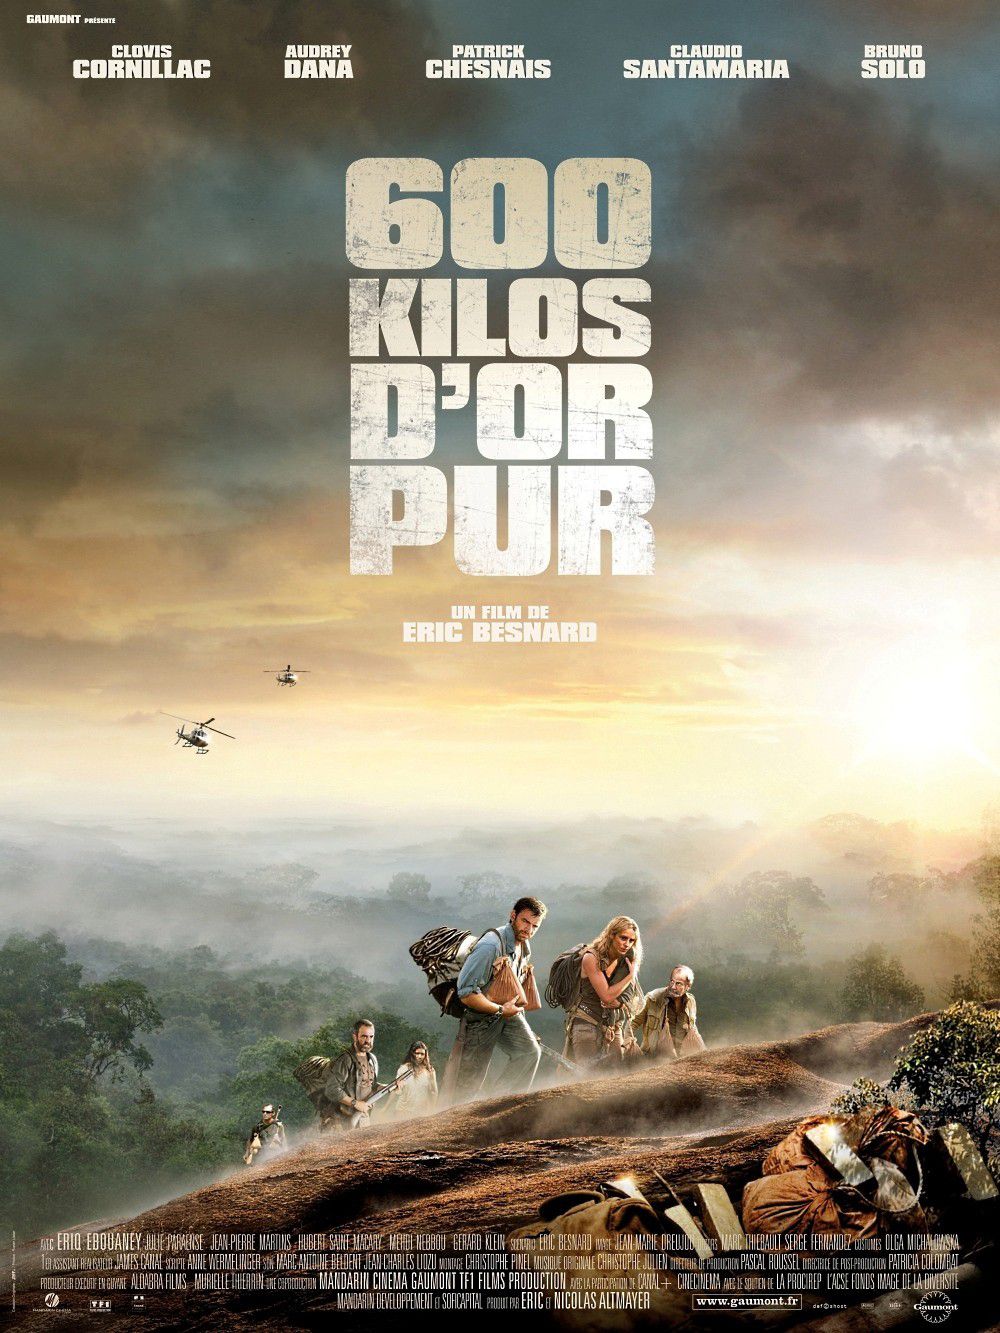 Film 600 Kilos d'or pur - Film (2010)